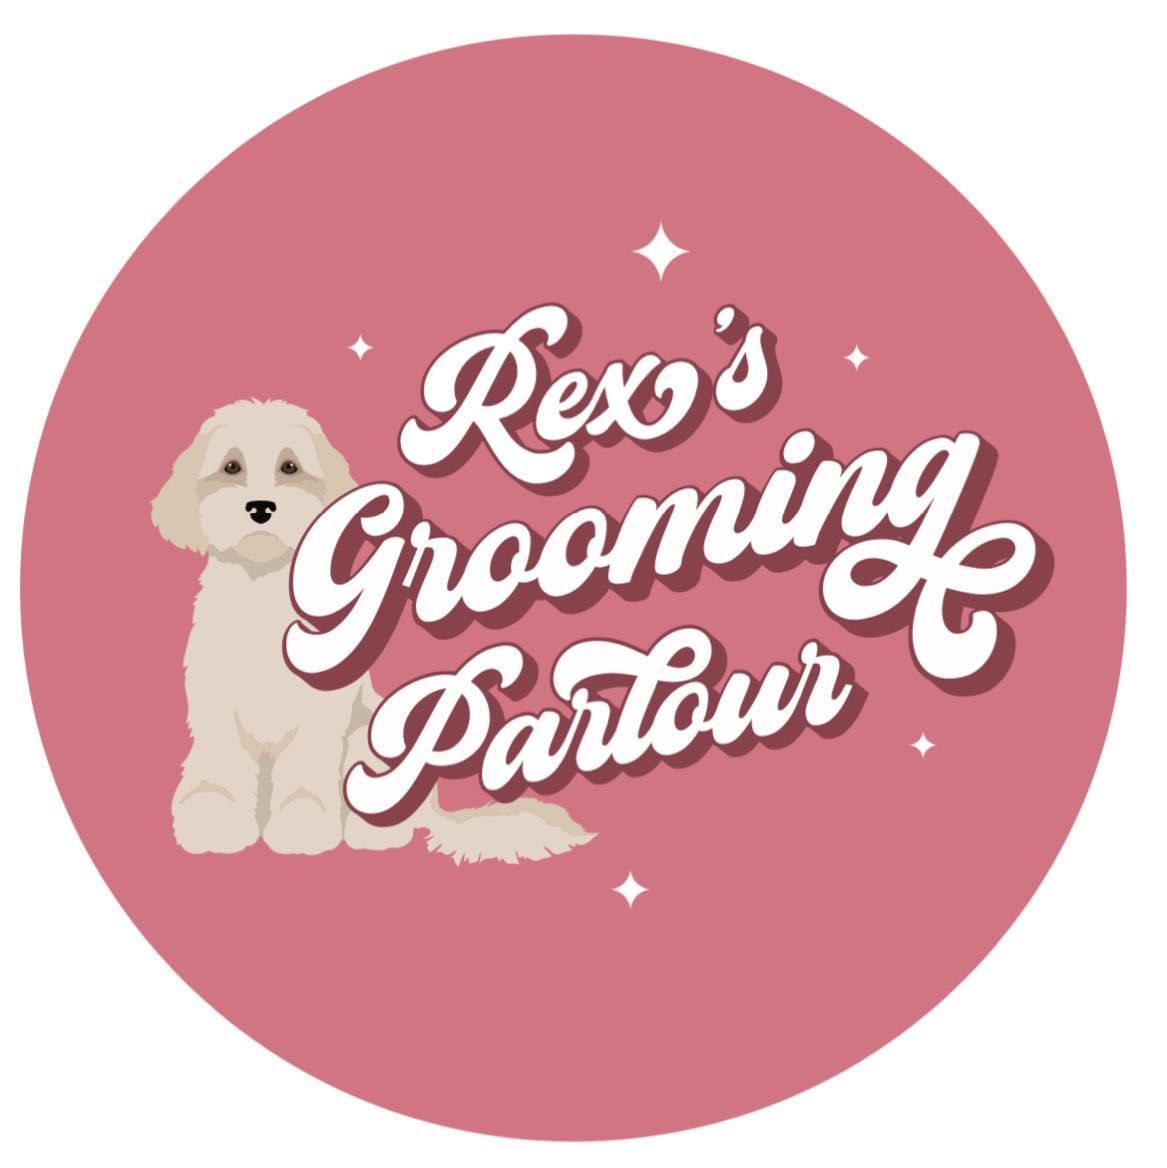 Rex's Grooming Parlour, 116 Magnolia Road, LS14 6WR, Leeds